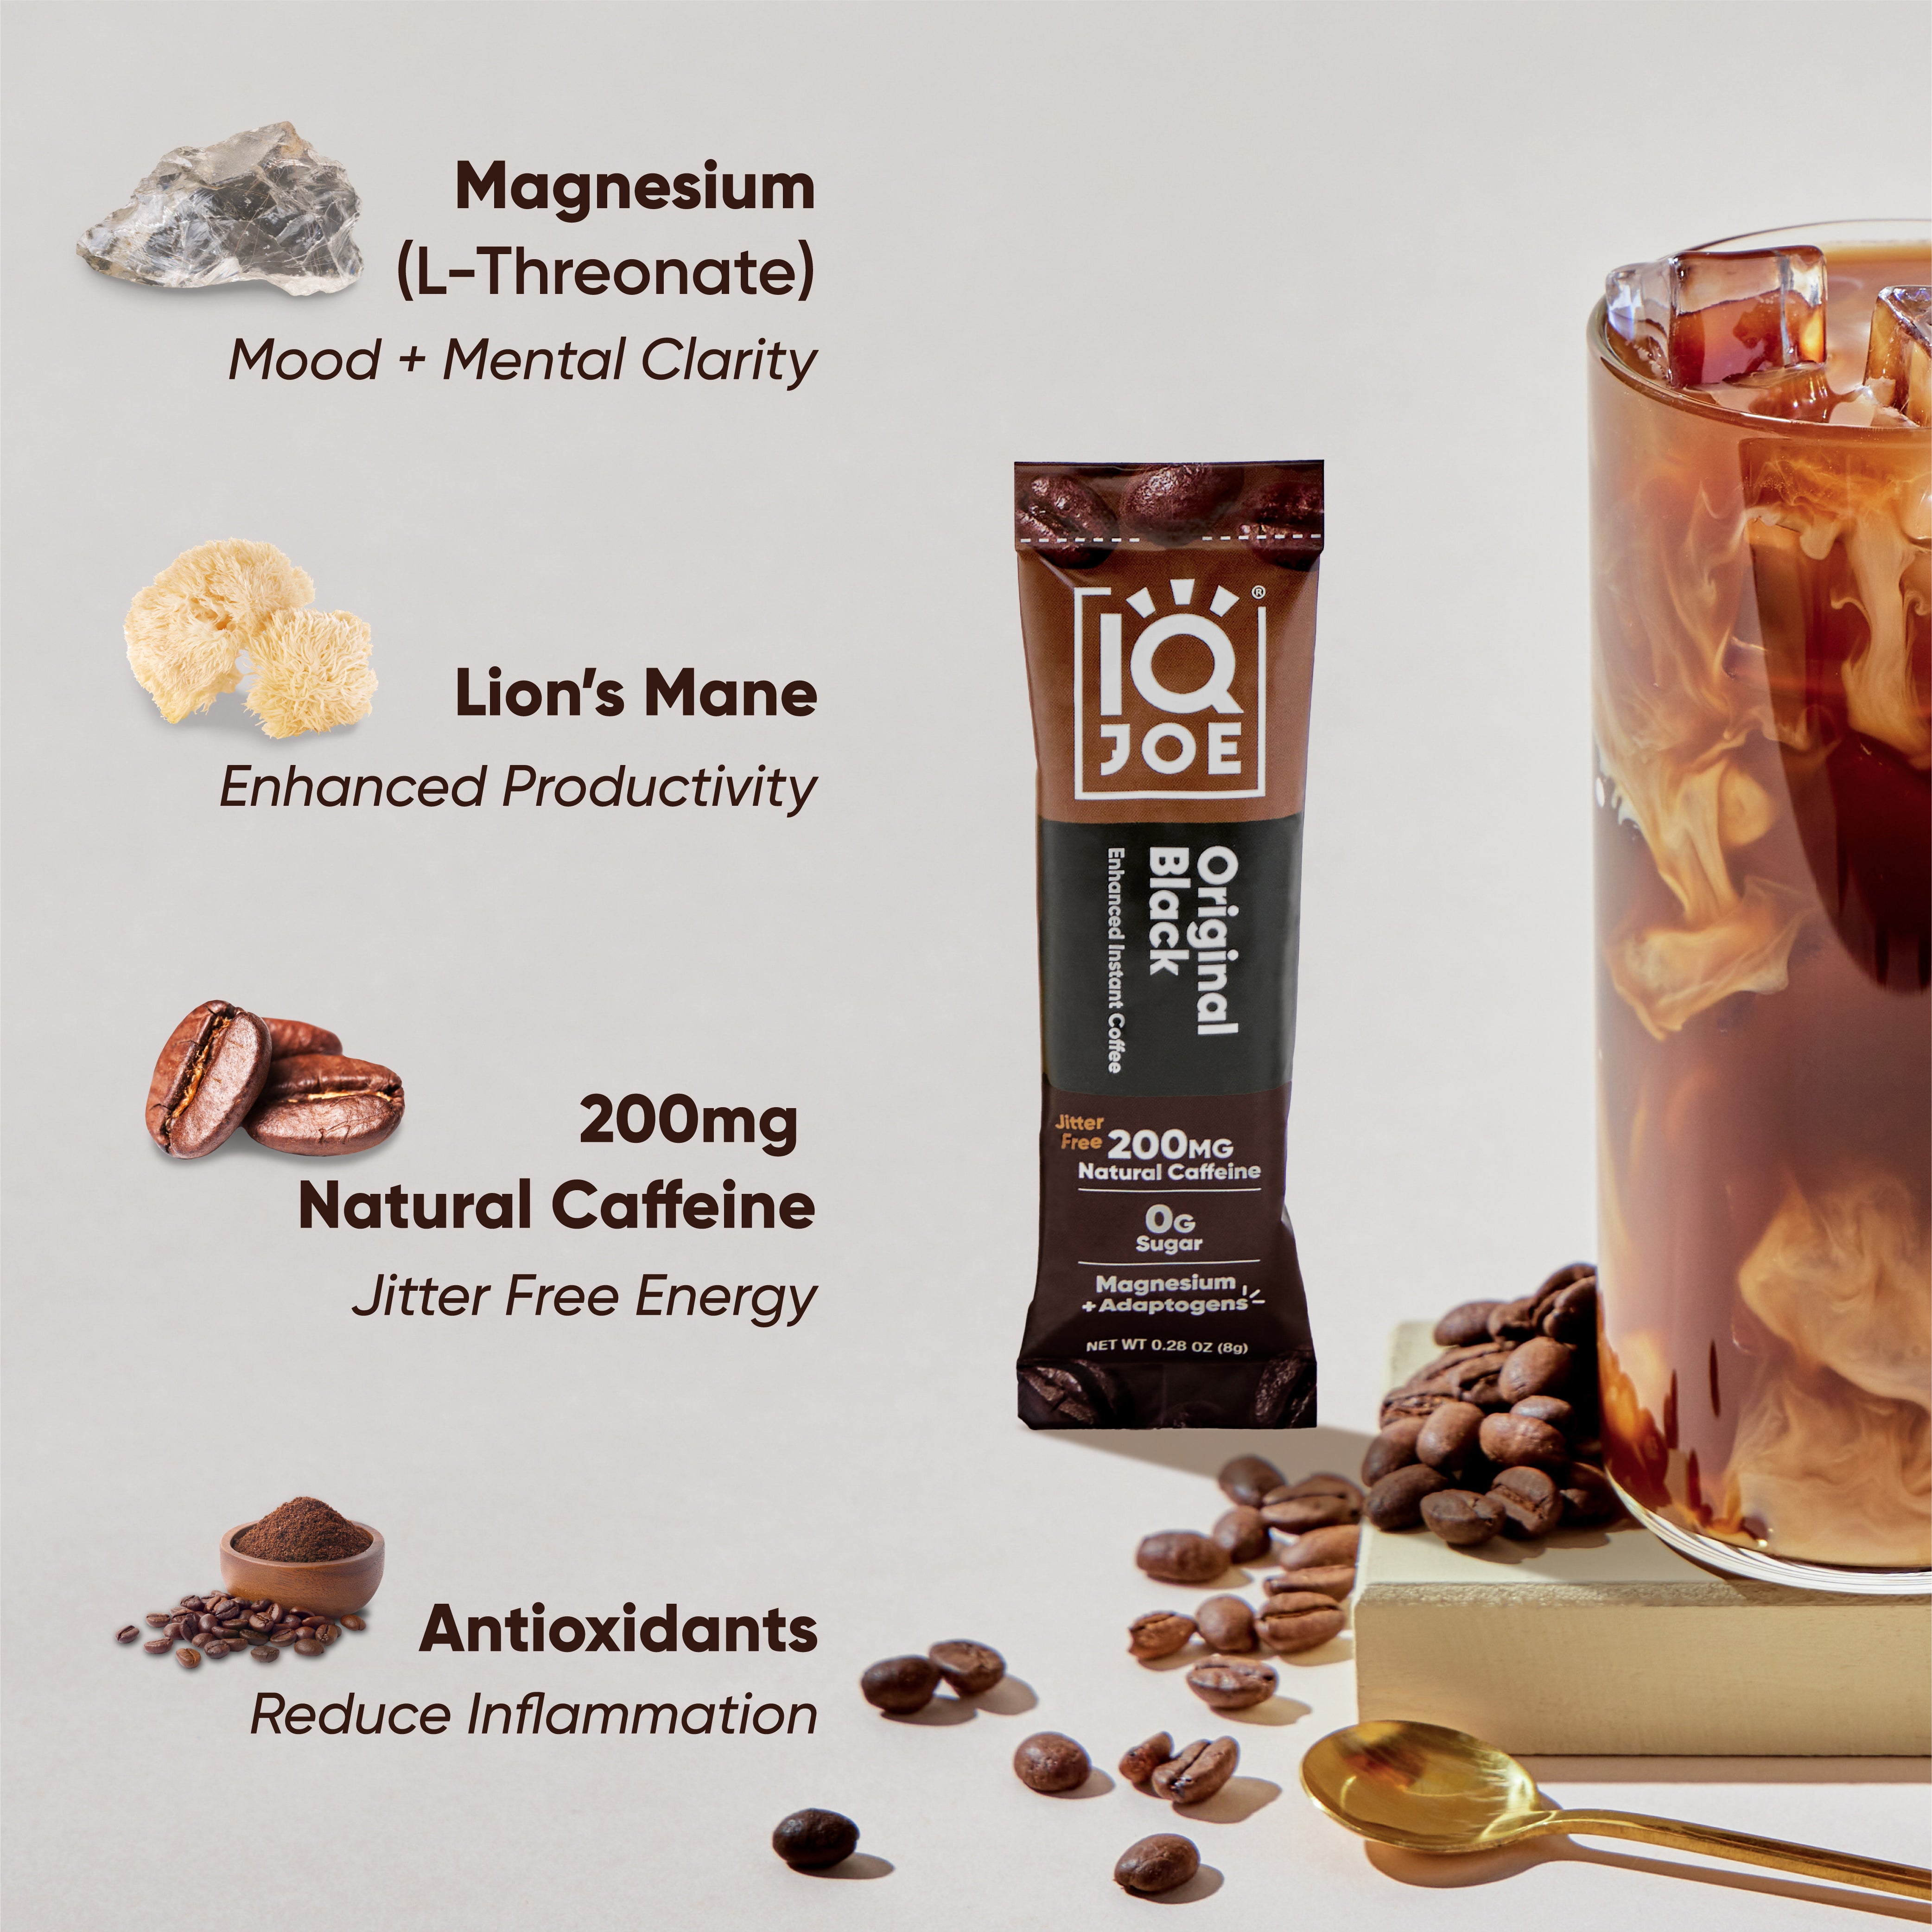 IQJOE Original Black Nootropic Coffee with Magnesium L-Threonate, Lion's Mane Mushroom, 200mg of Natural Caffeine, Antioxidants